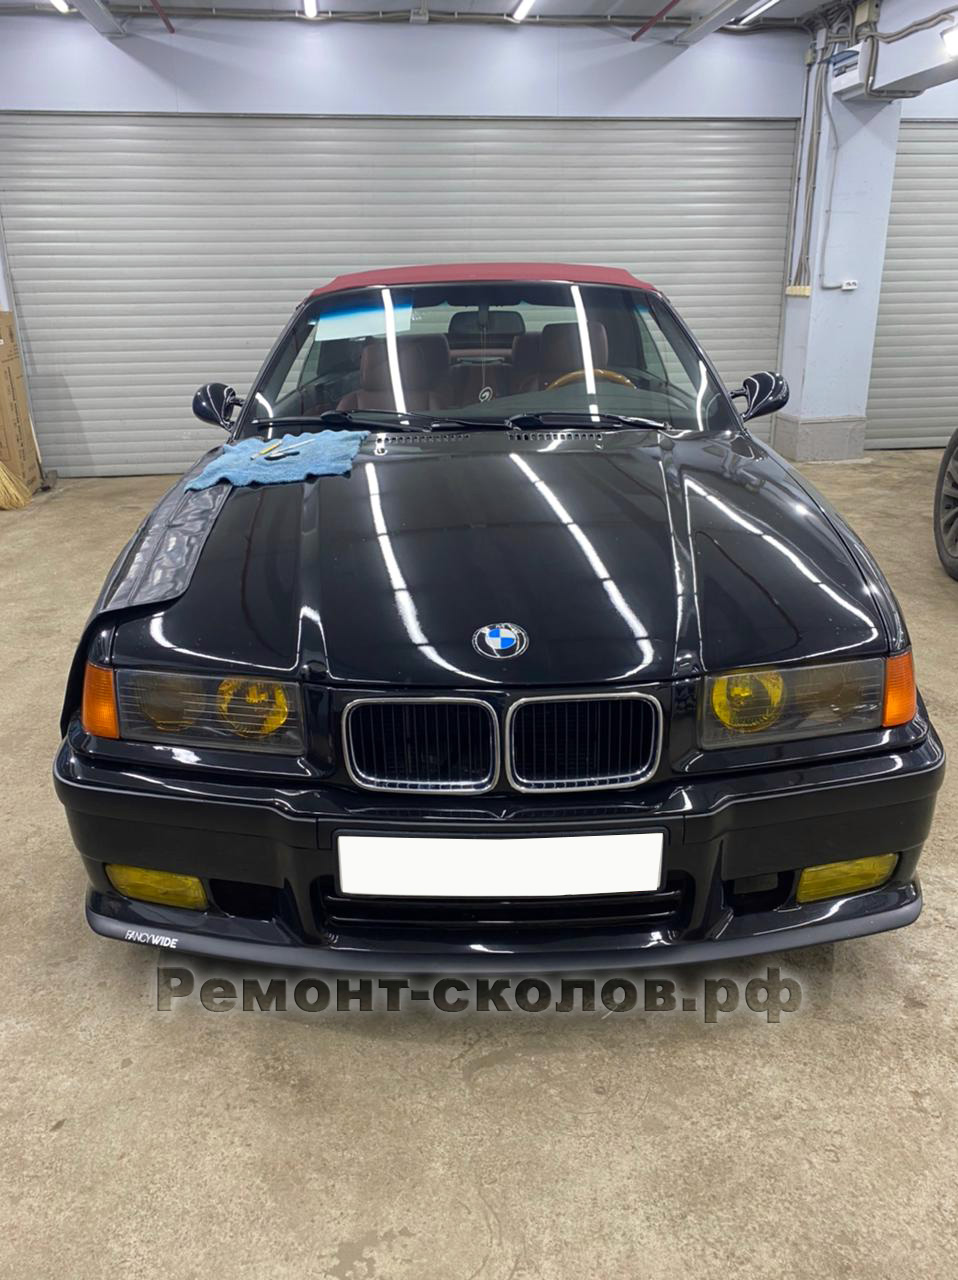 Ремонт автостекла BMW E36